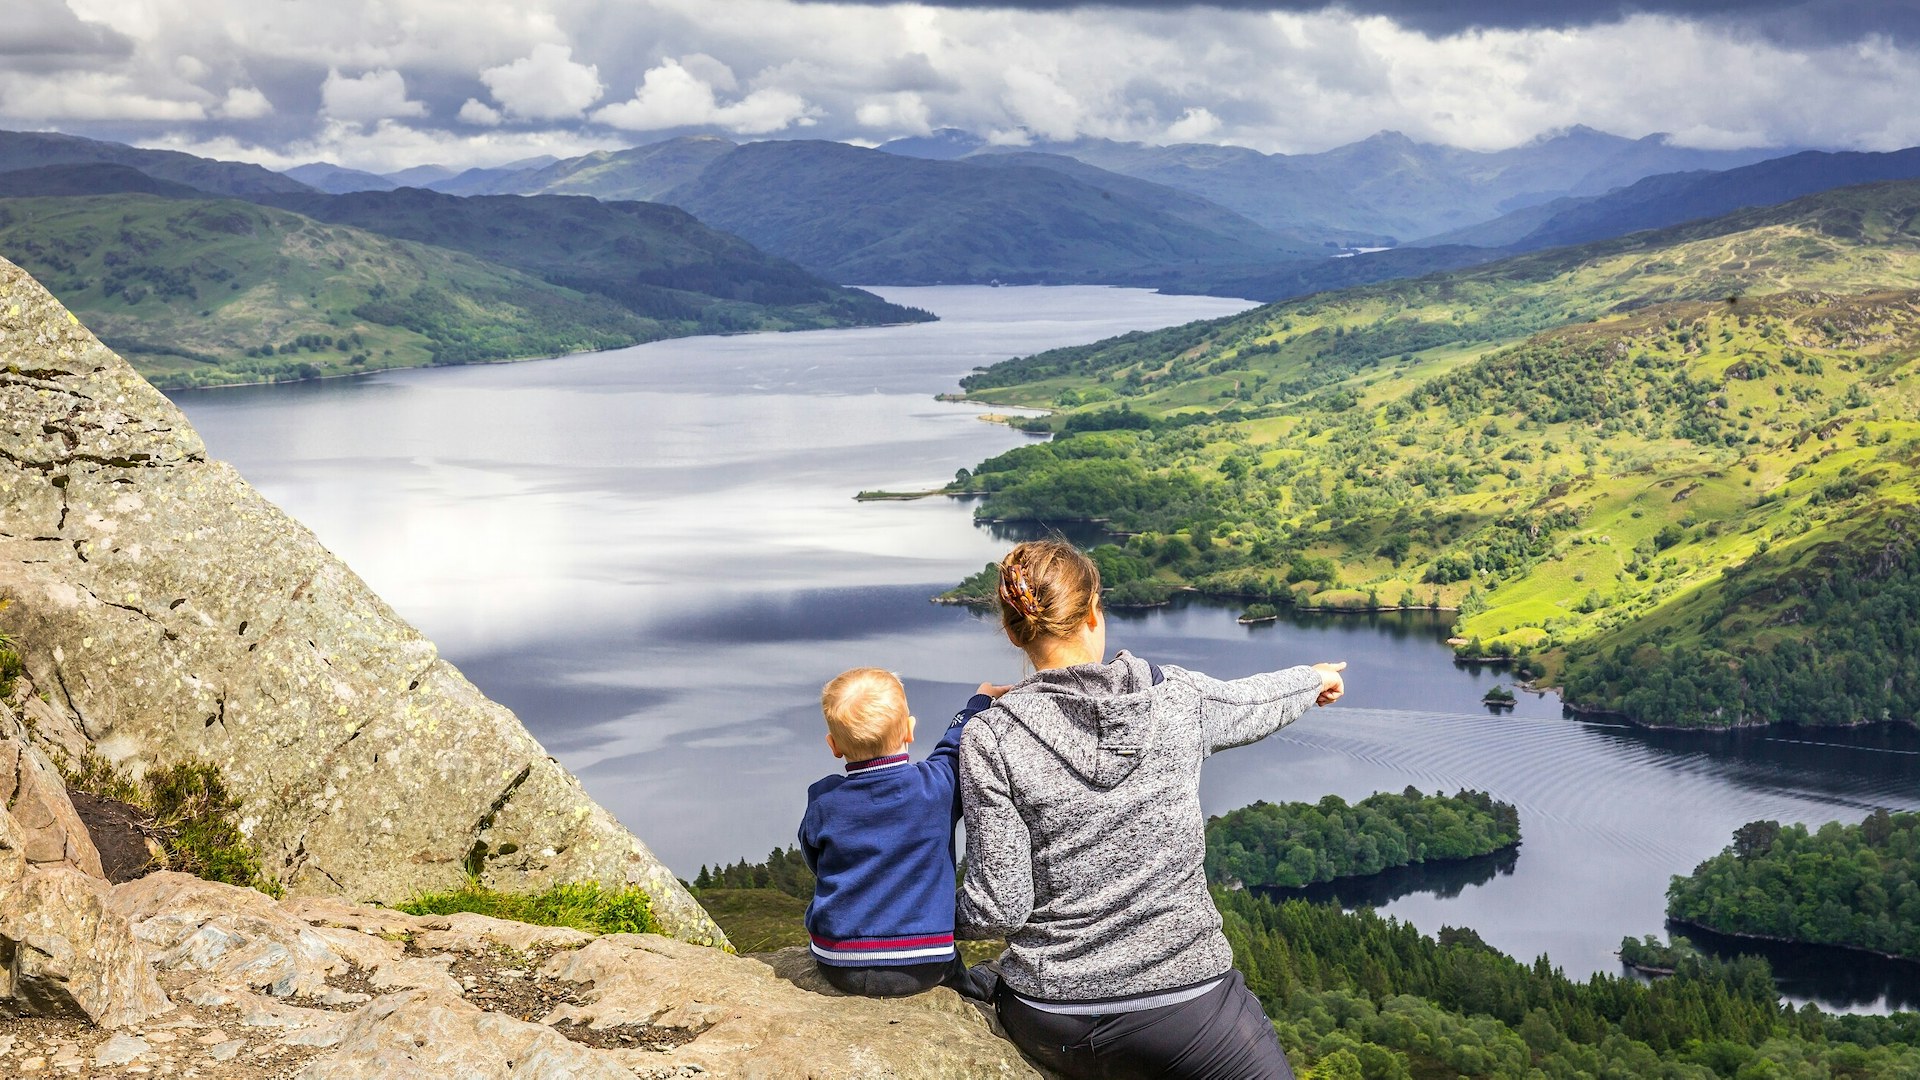 Mam and boy overlook views in Scotland